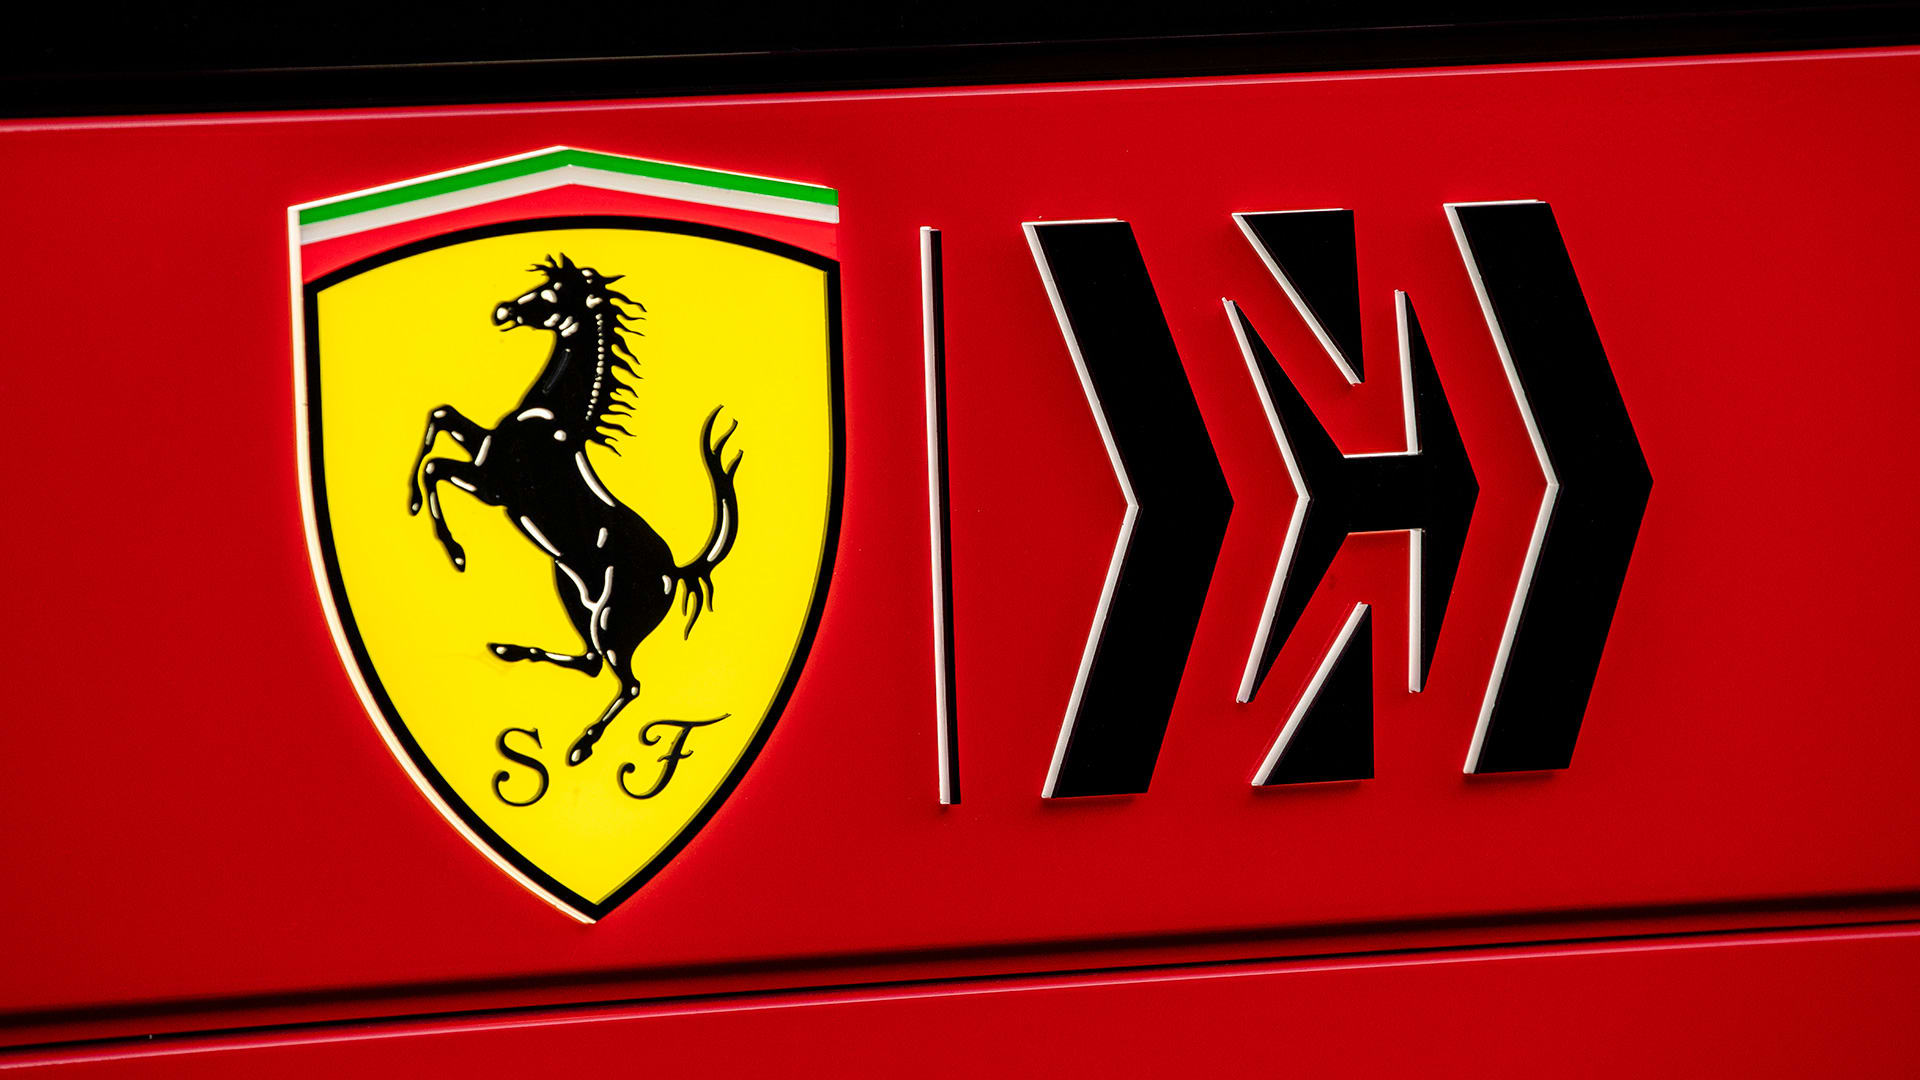 Watch Live As Ferrari Reveal Their New F1 Car For 2021 The Sf21 Formula 1